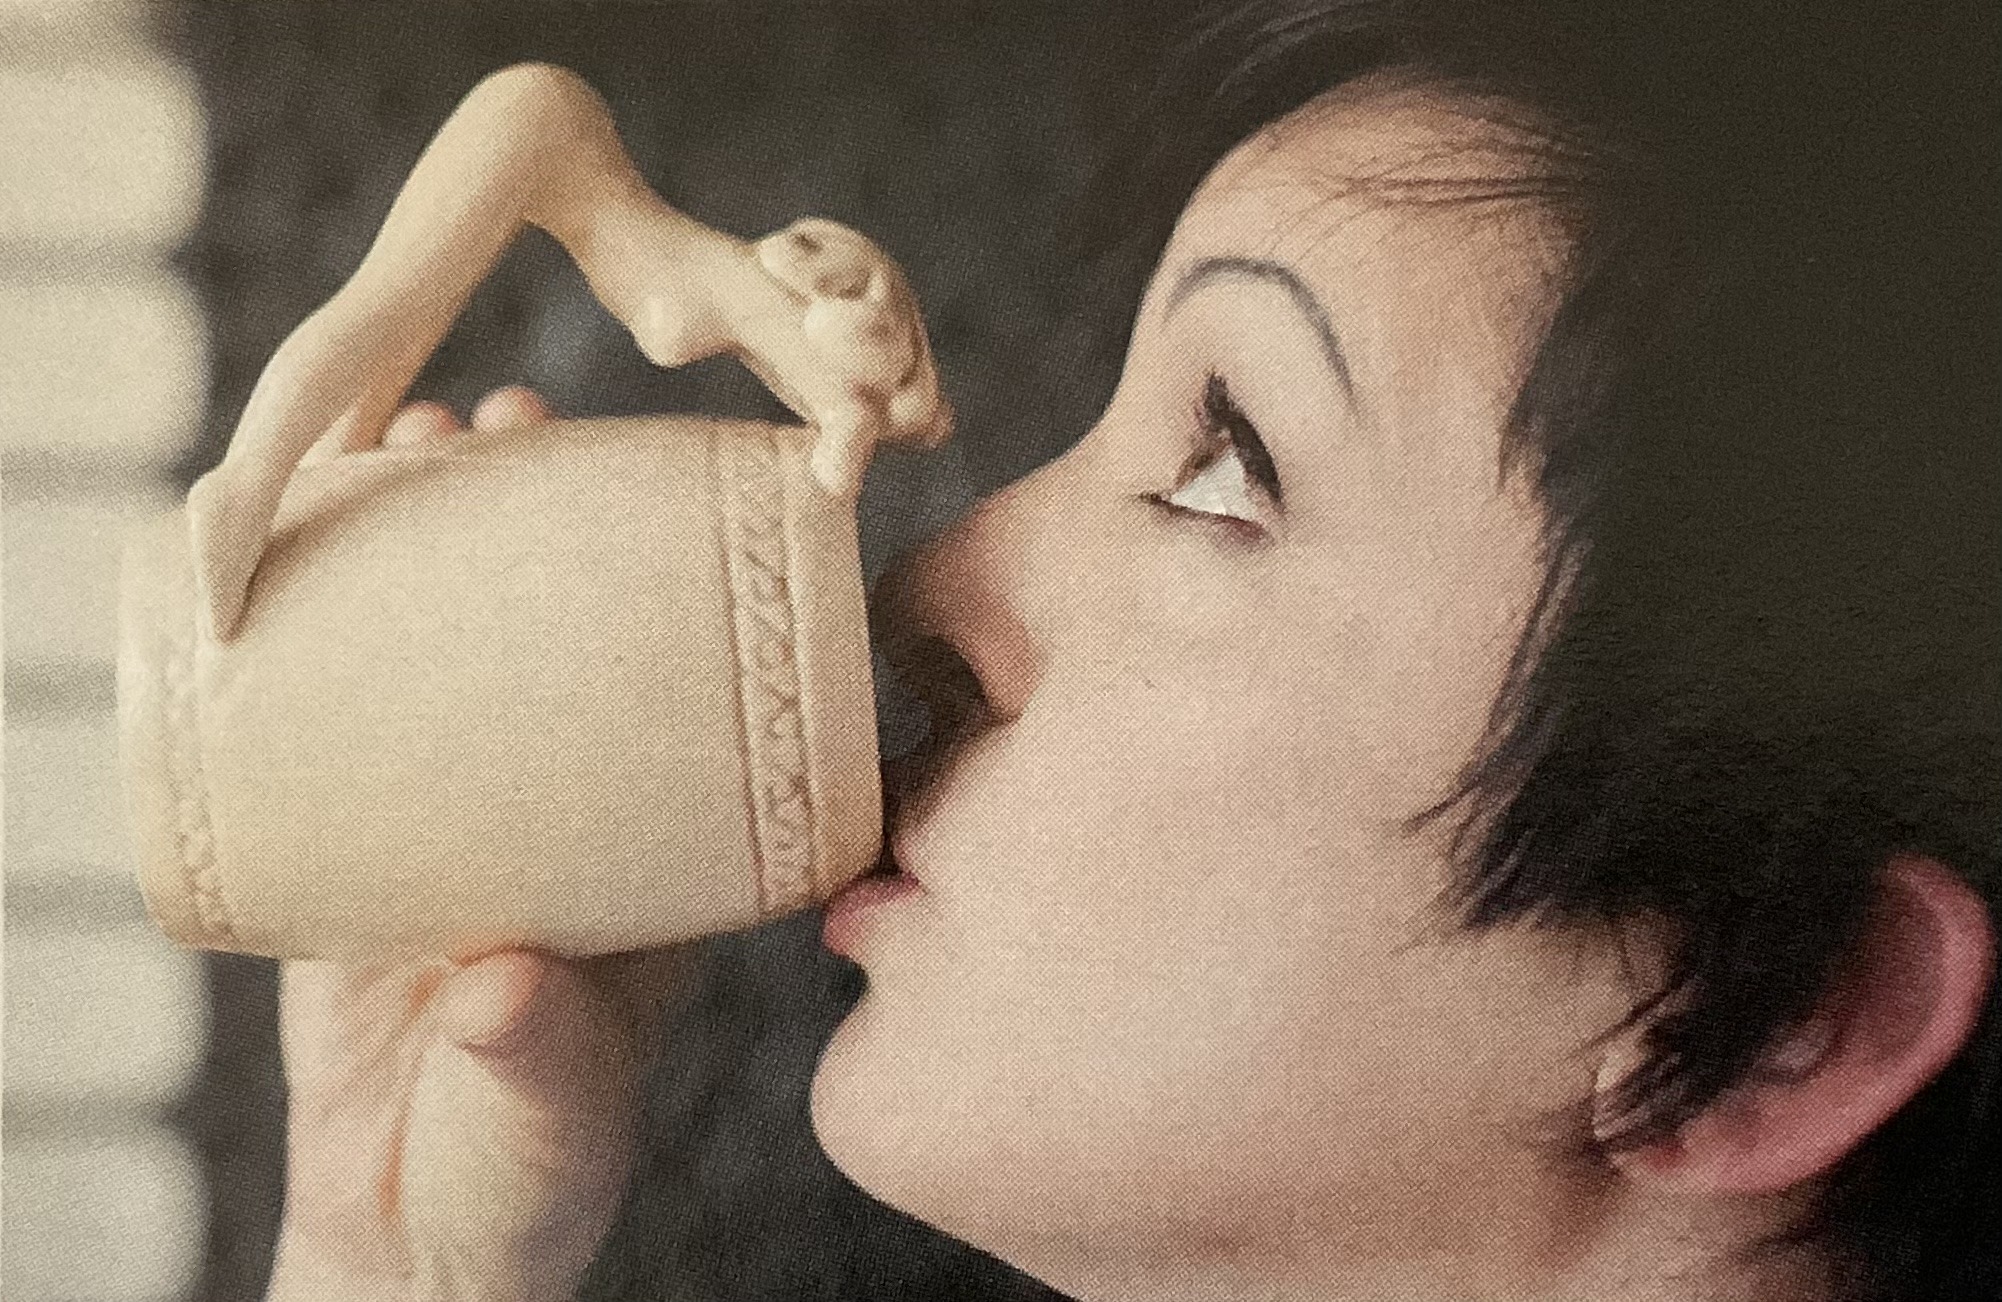 Female hands holding hot cup of coffee or tea. Coffee Mug by Liss Art  Studio - Fine Art America